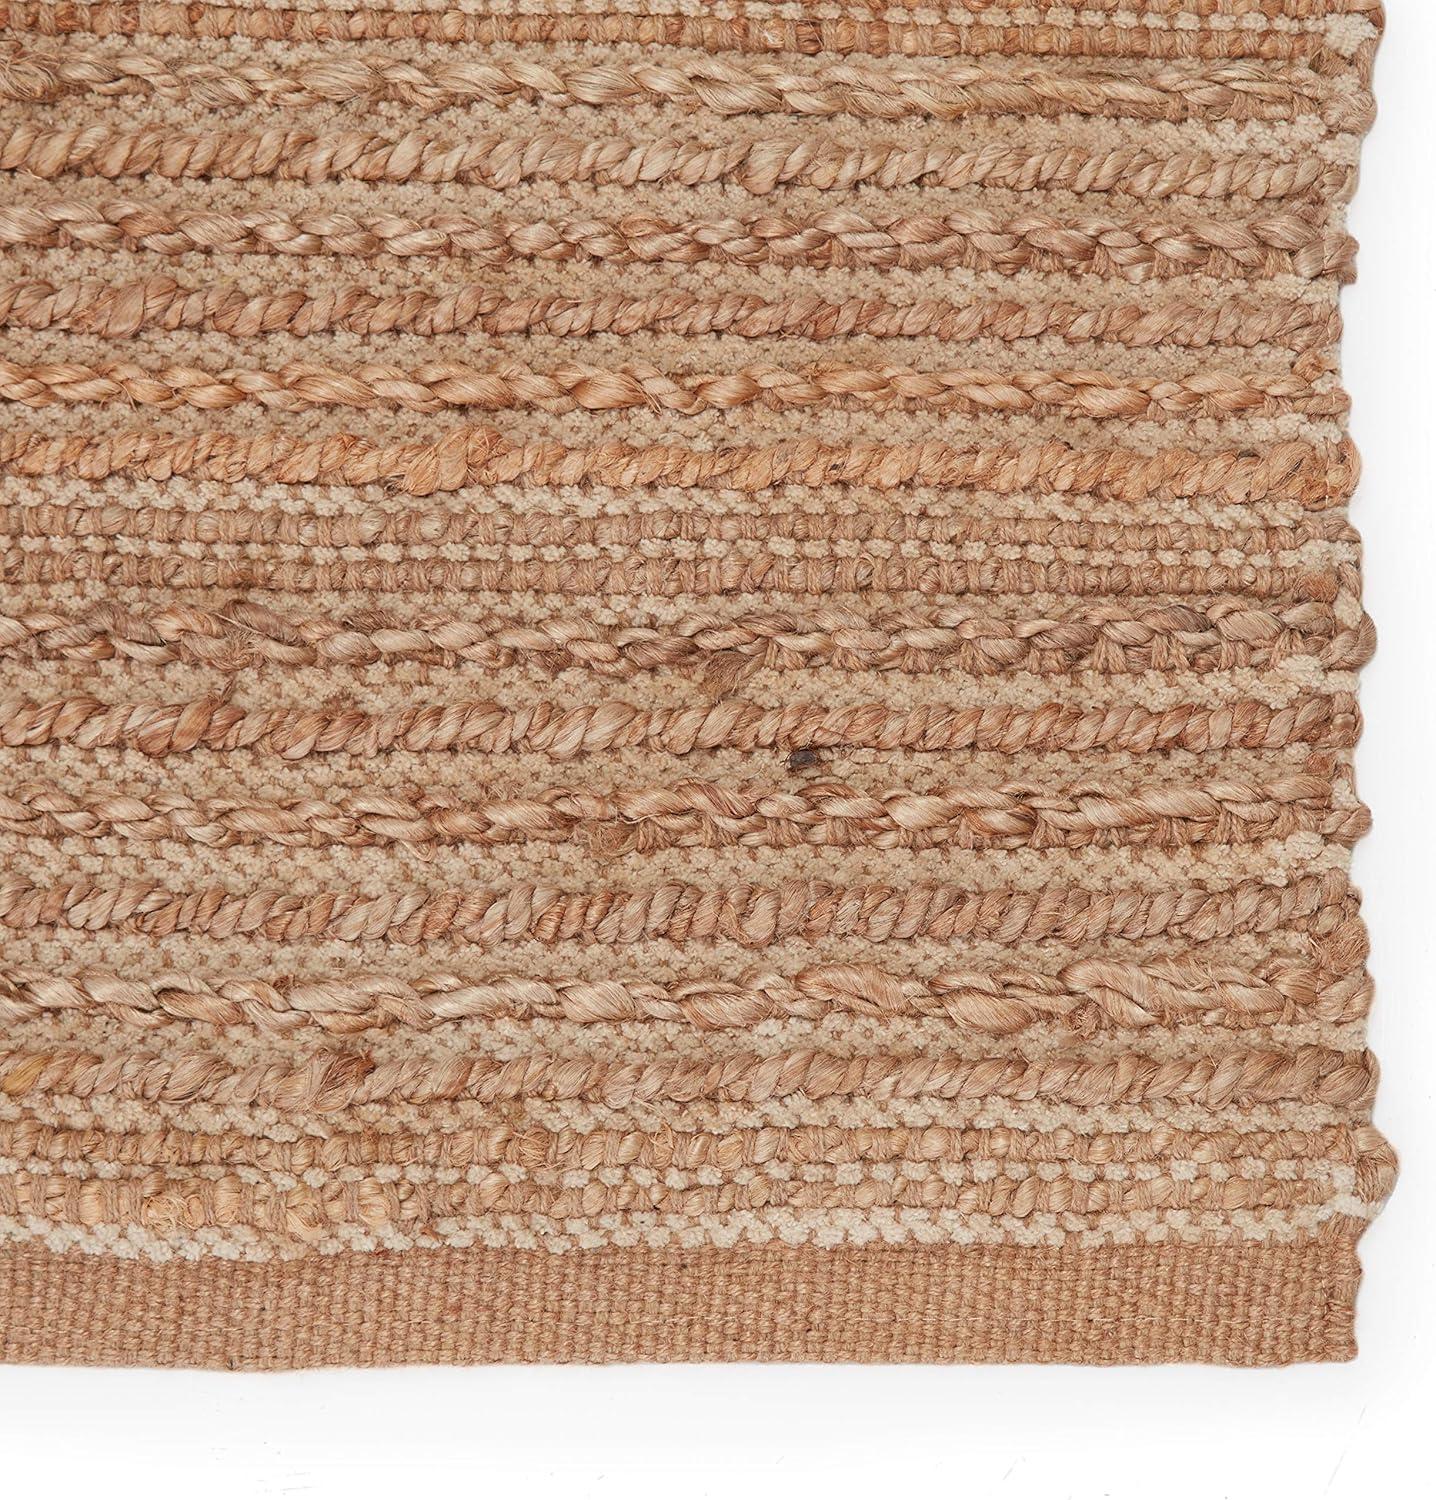 Reversible Tan & Ivory Flat Woven Jute-Cotton Rug 5'x8'